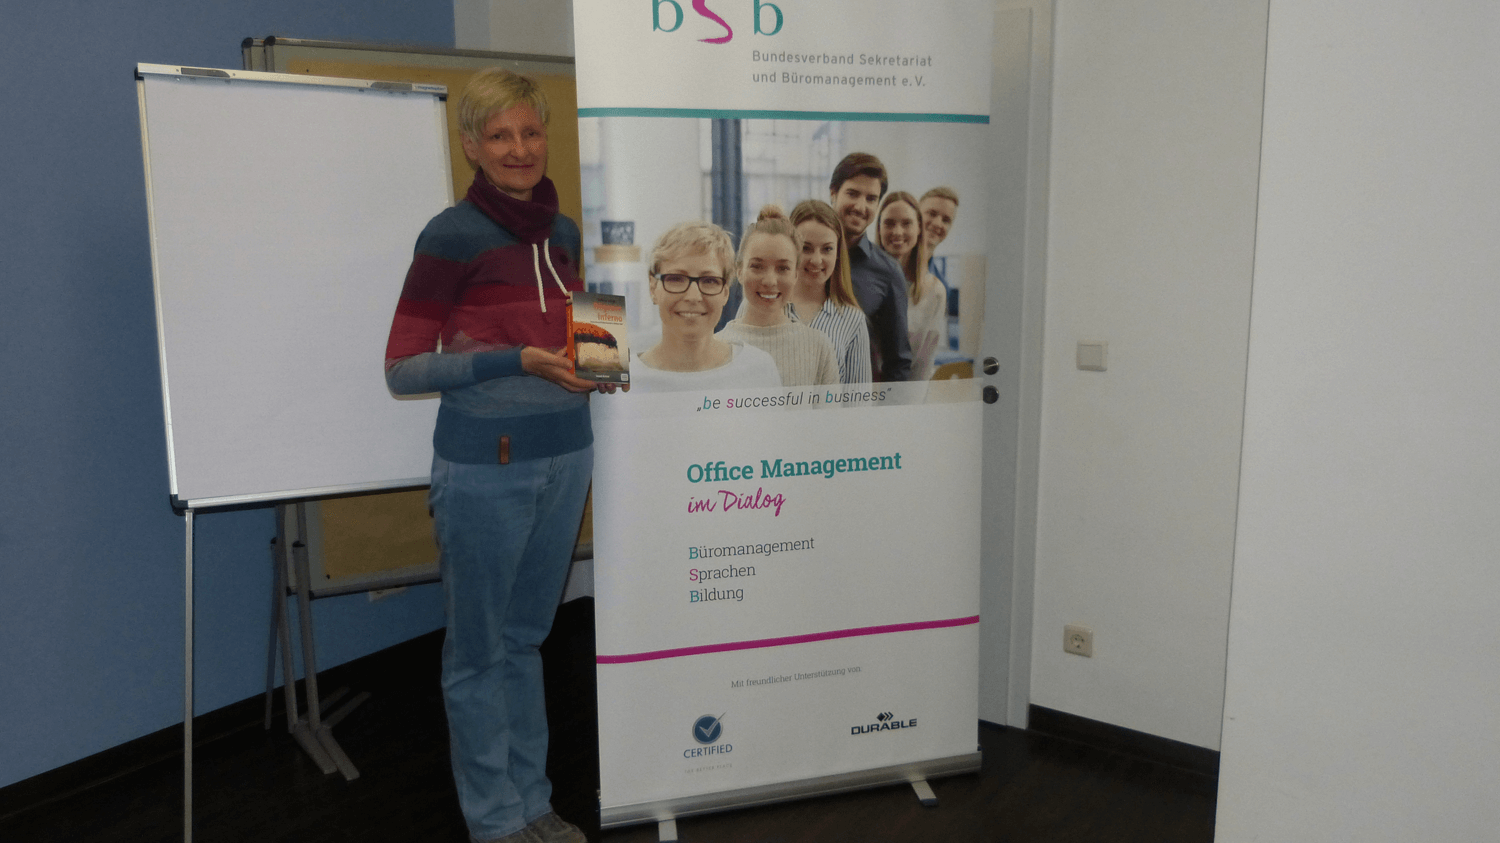 bSb-Regionalgruppe Chemnitz